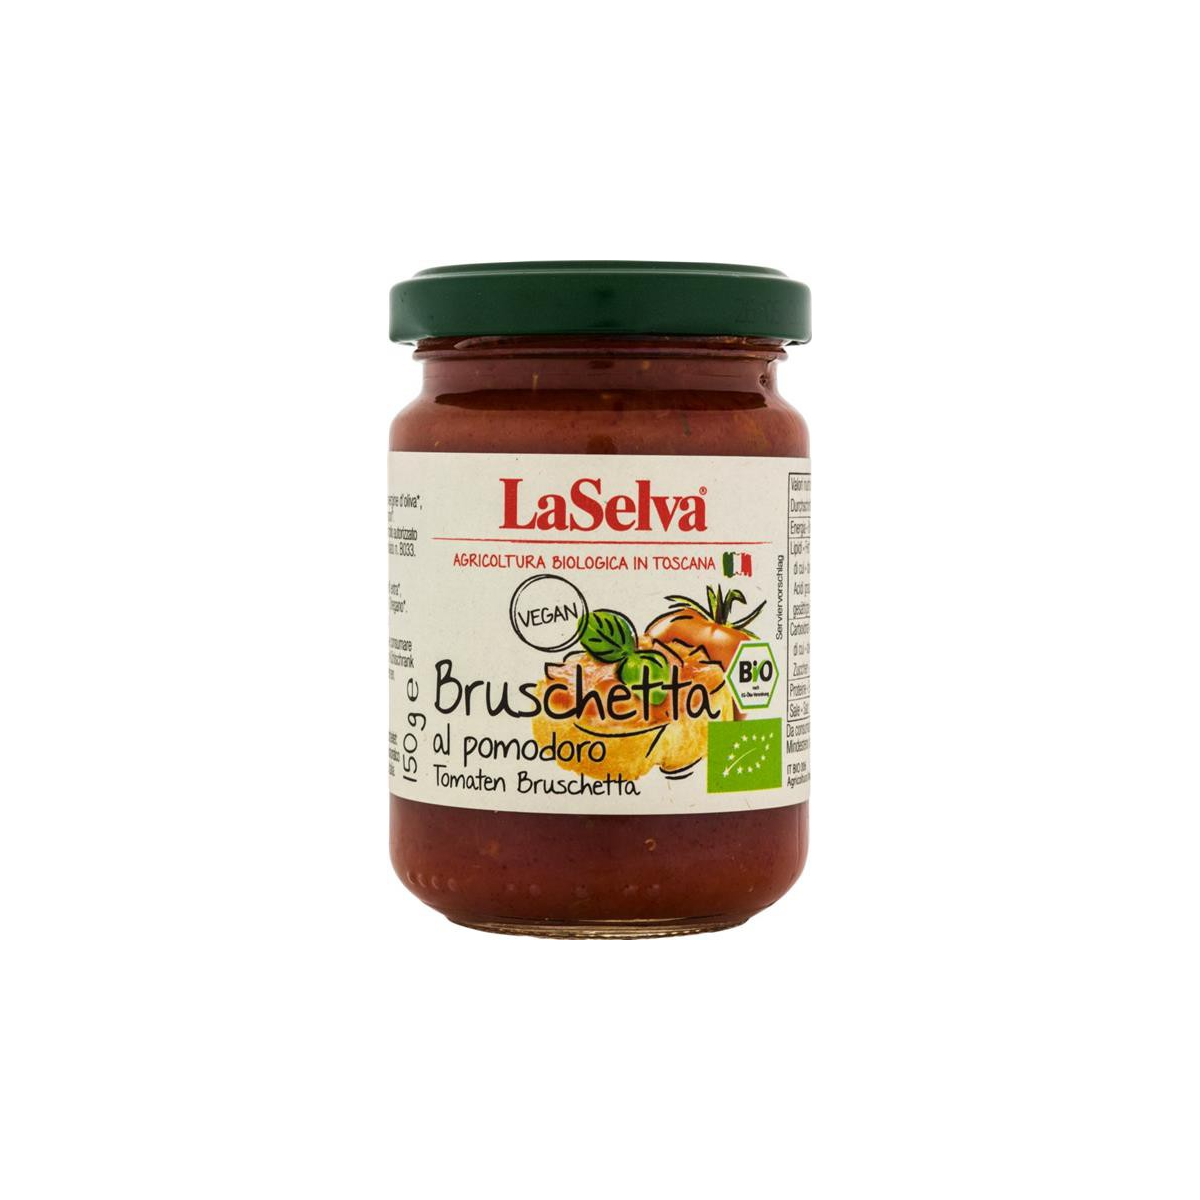 LaSelva - Bruschetta pomodoro